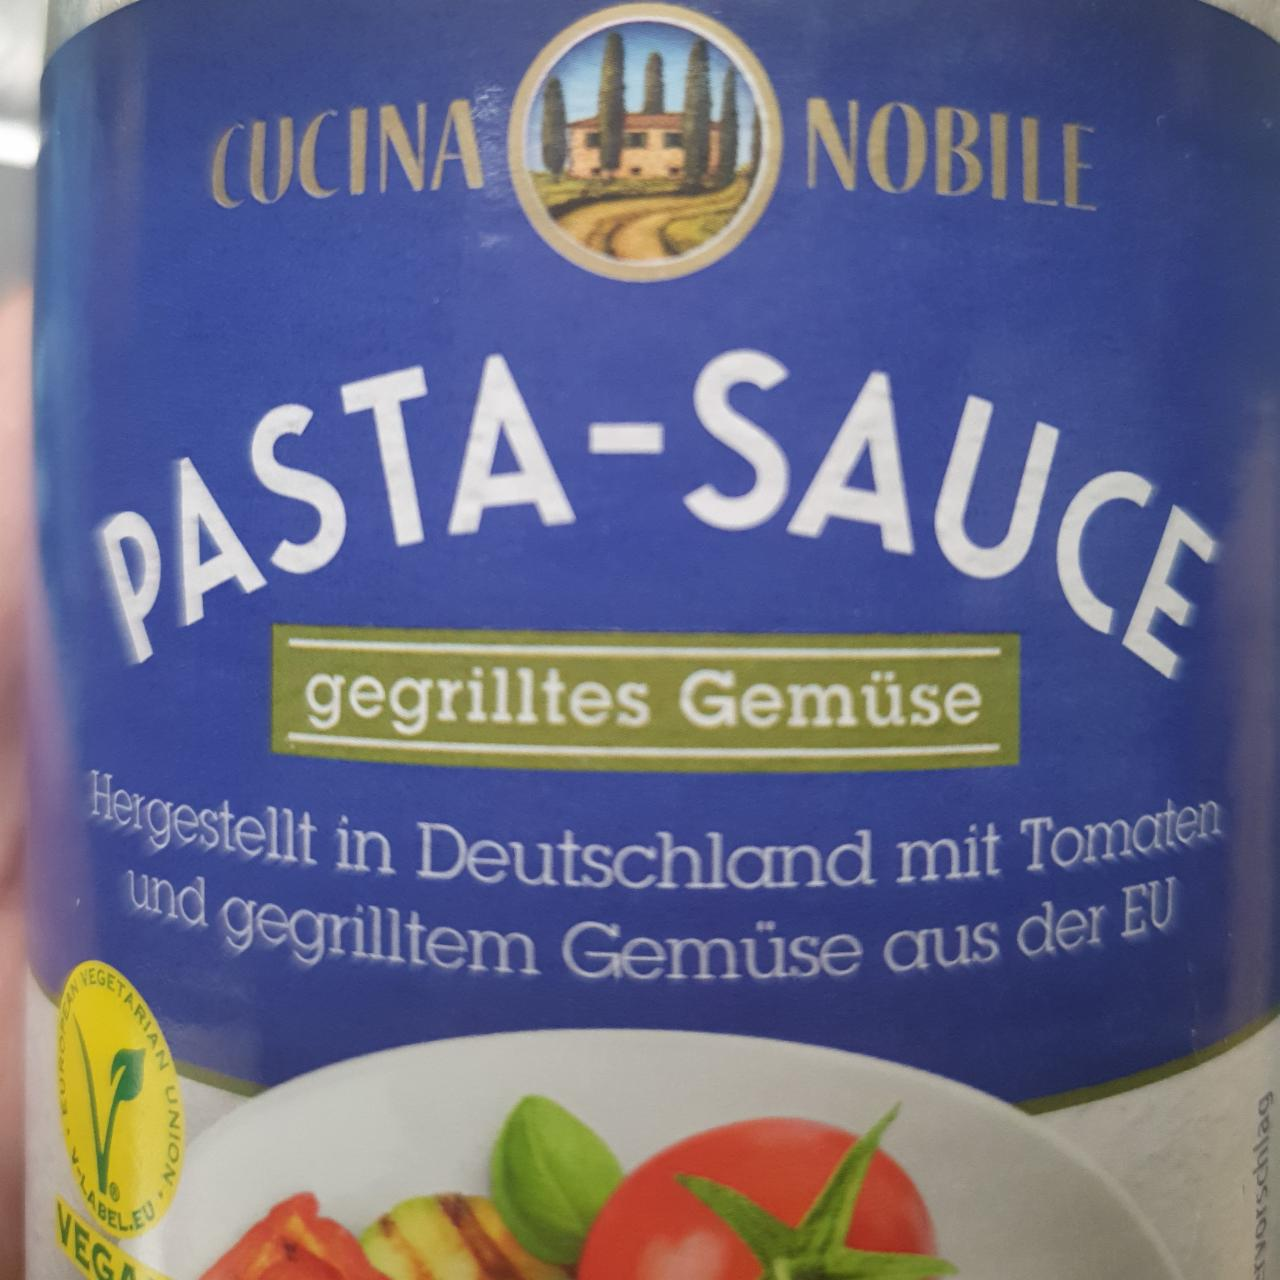 Fotografie - Pasta-Sauce gegrilltes Gemüse Cucina Nobile